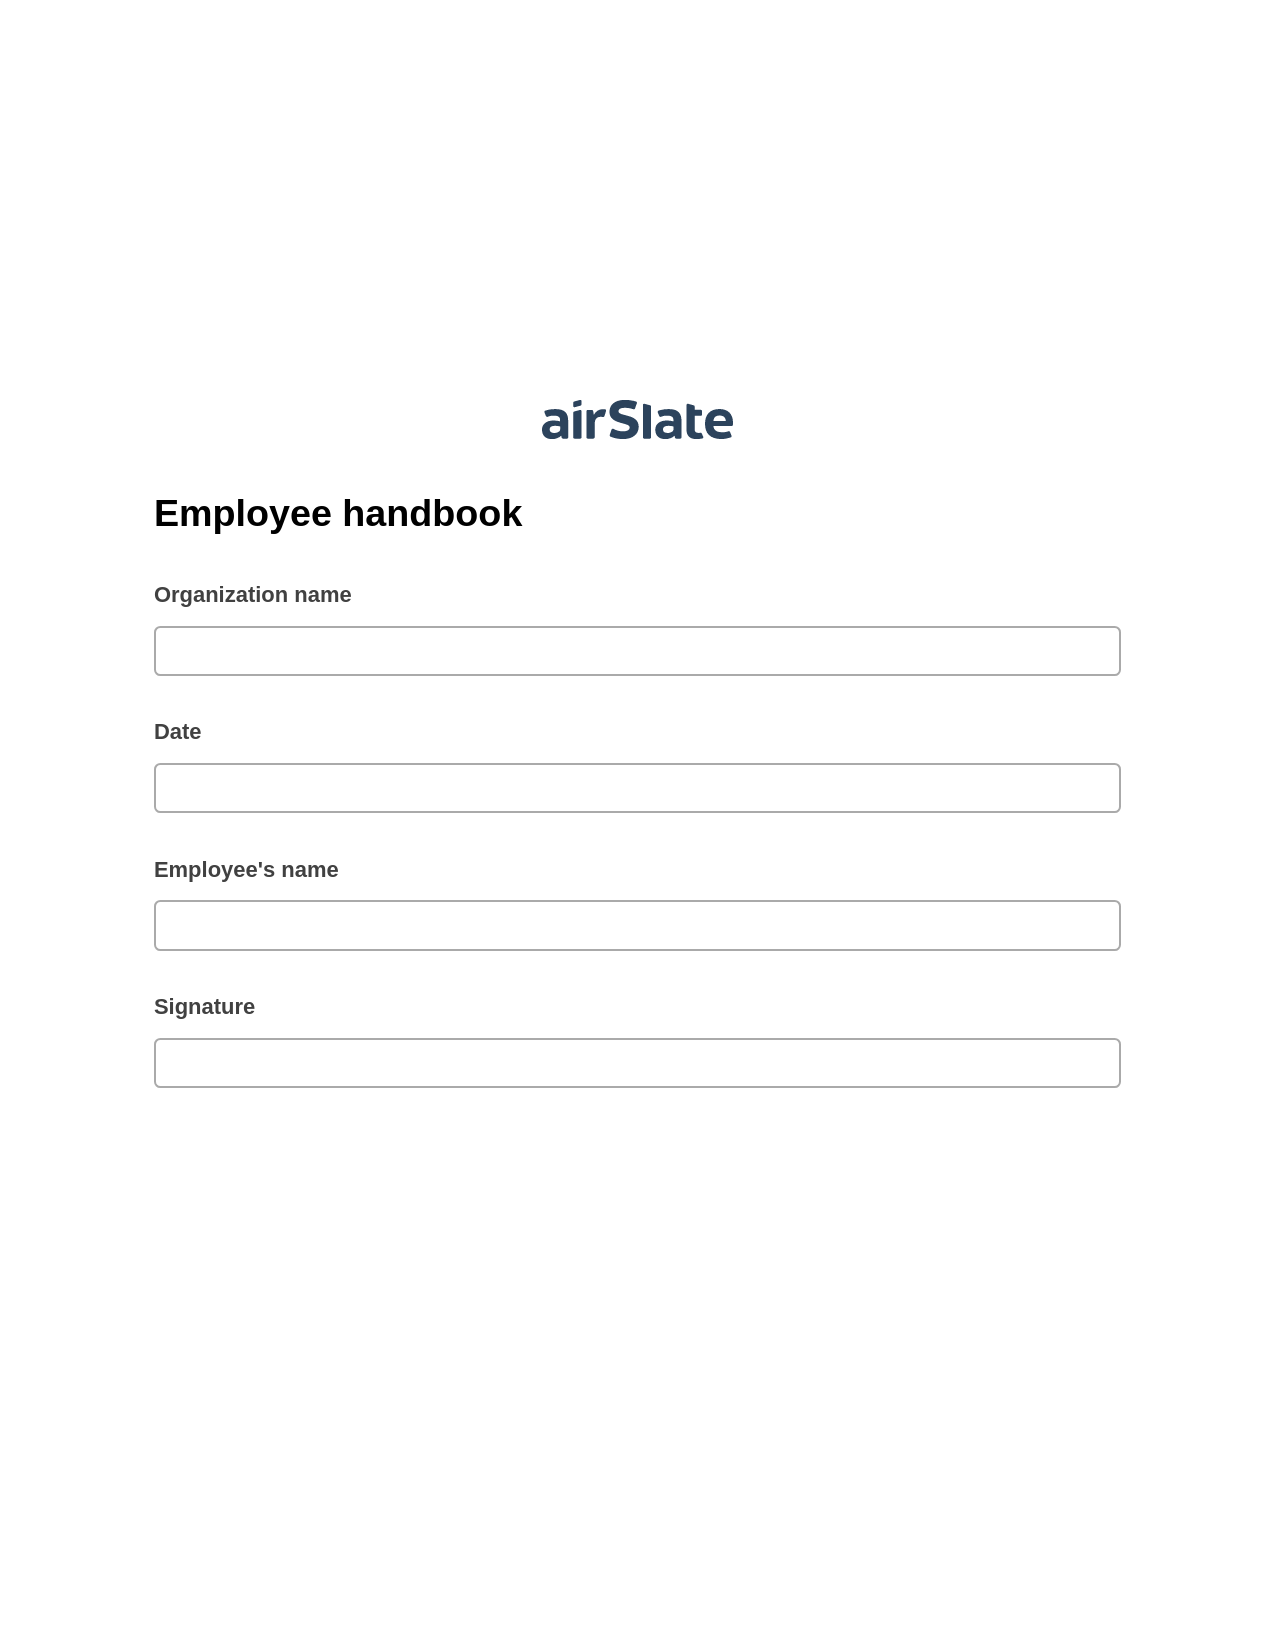 Employee handbook Pre-fill from NetSuite Records Bot, Google Sheet Two-Way Binding Bot, OneDrive Bot